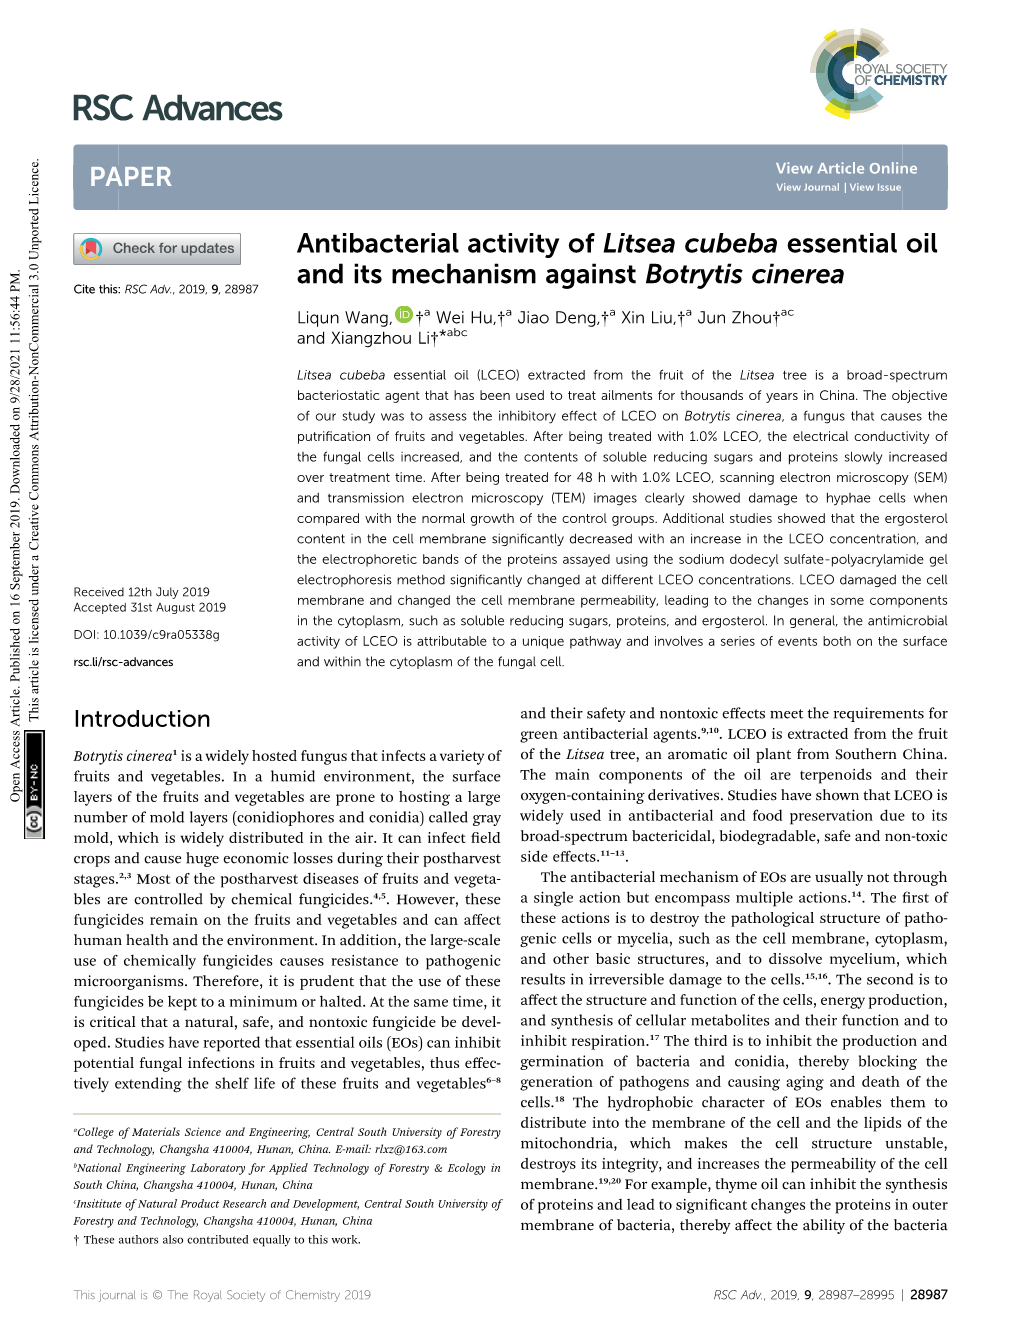 Antibacterial Activity of Litsea Cubeba Essential Oil and Its Mechanism Against Botrytis Cinerea